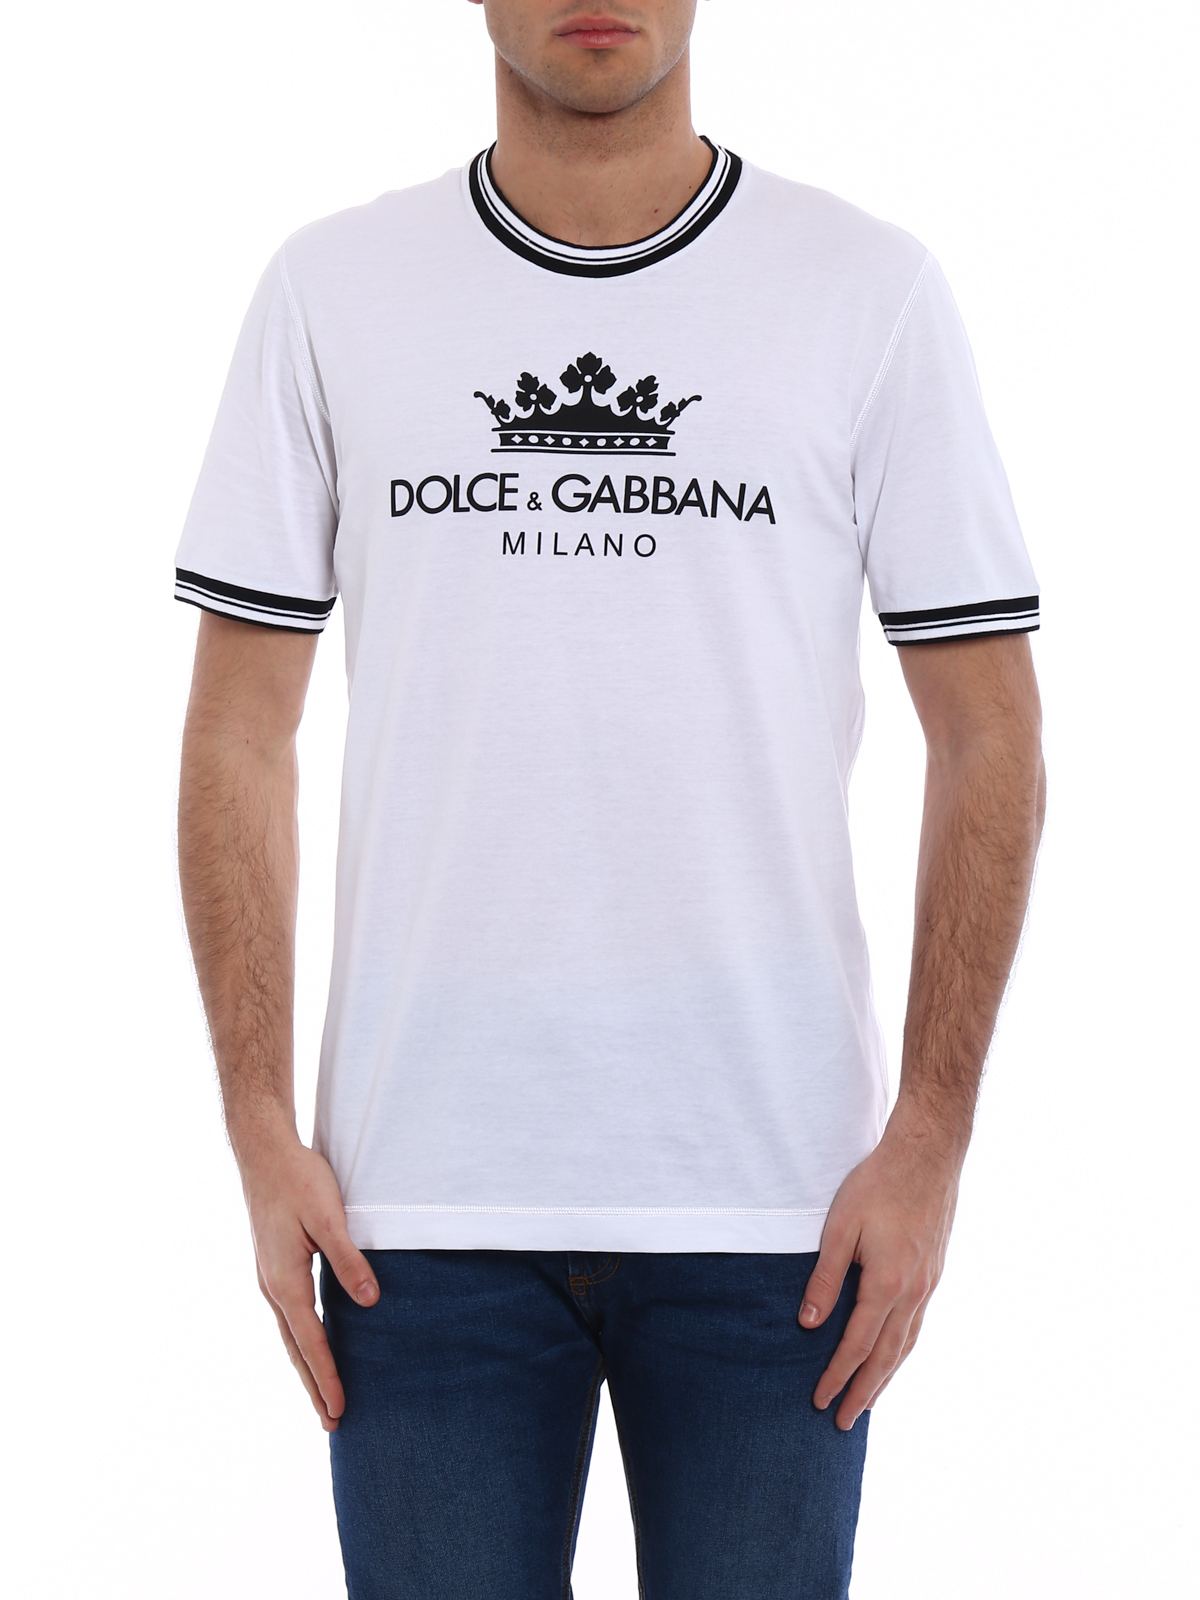 Soaked Tariff hard working T-shirts Dolce & Gabbana - DG Crown white cotton T-shirt - G8II3TFU7EQW0800